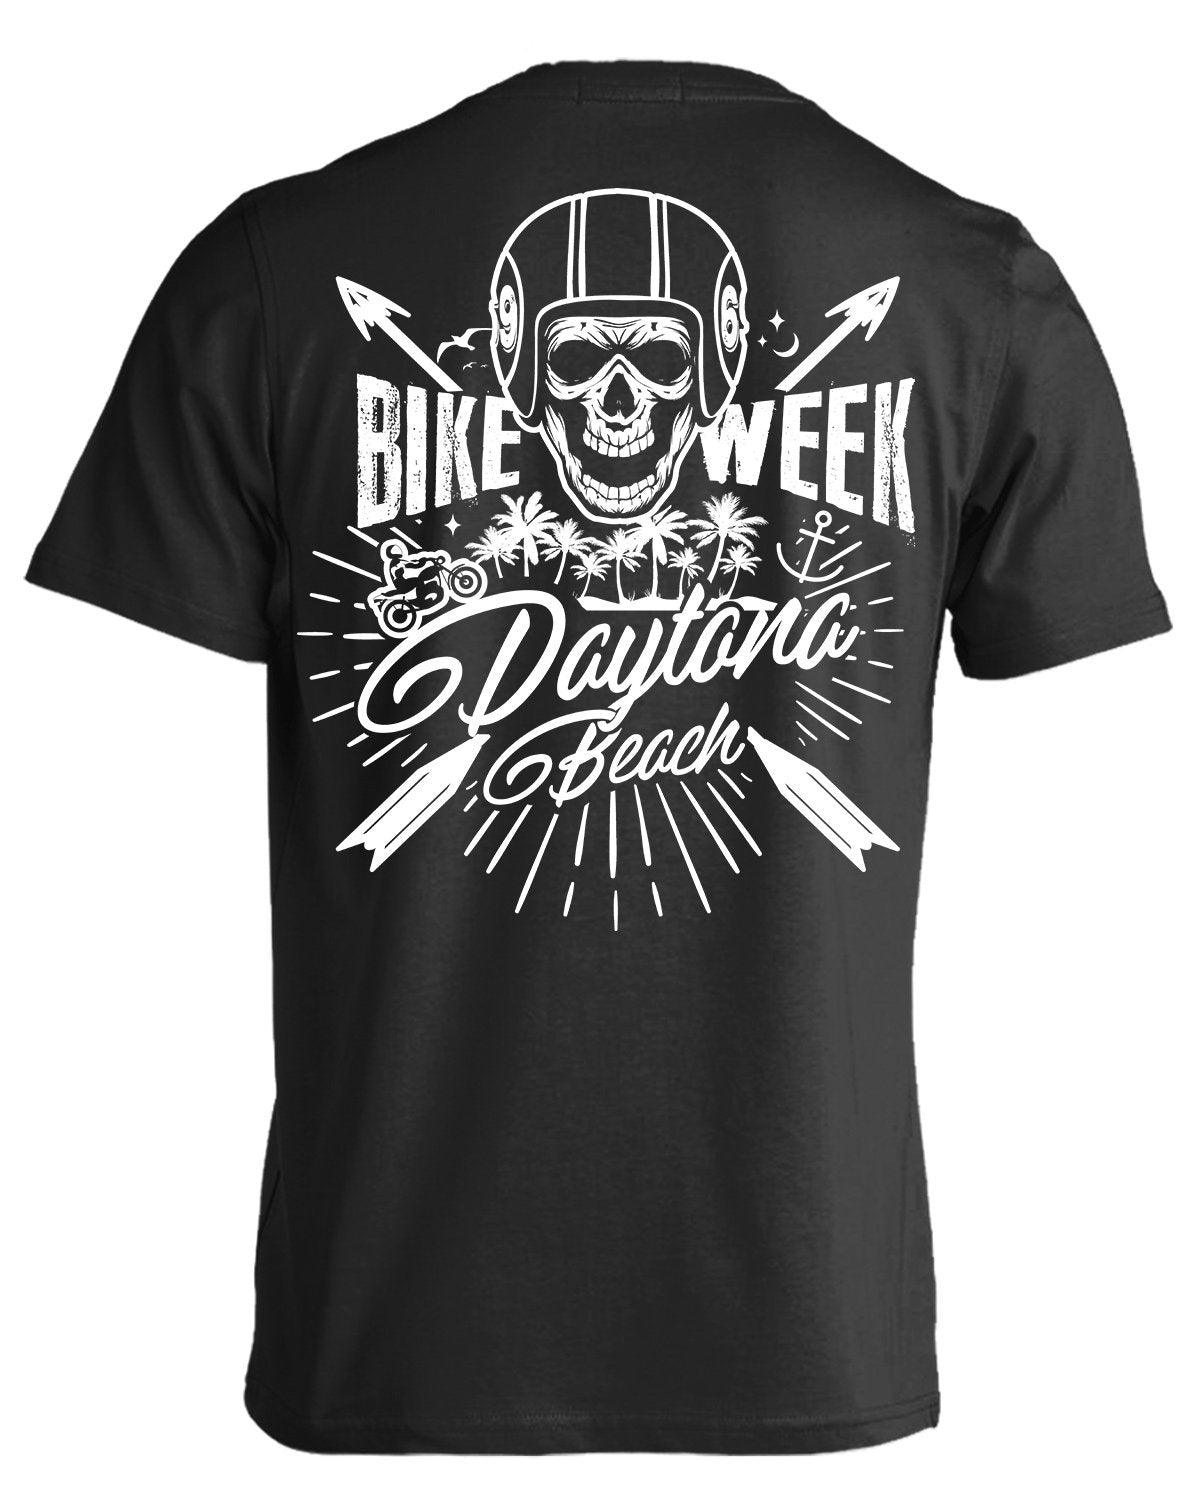 Bike Week: Daytona T-Shirt - American Legend Rider